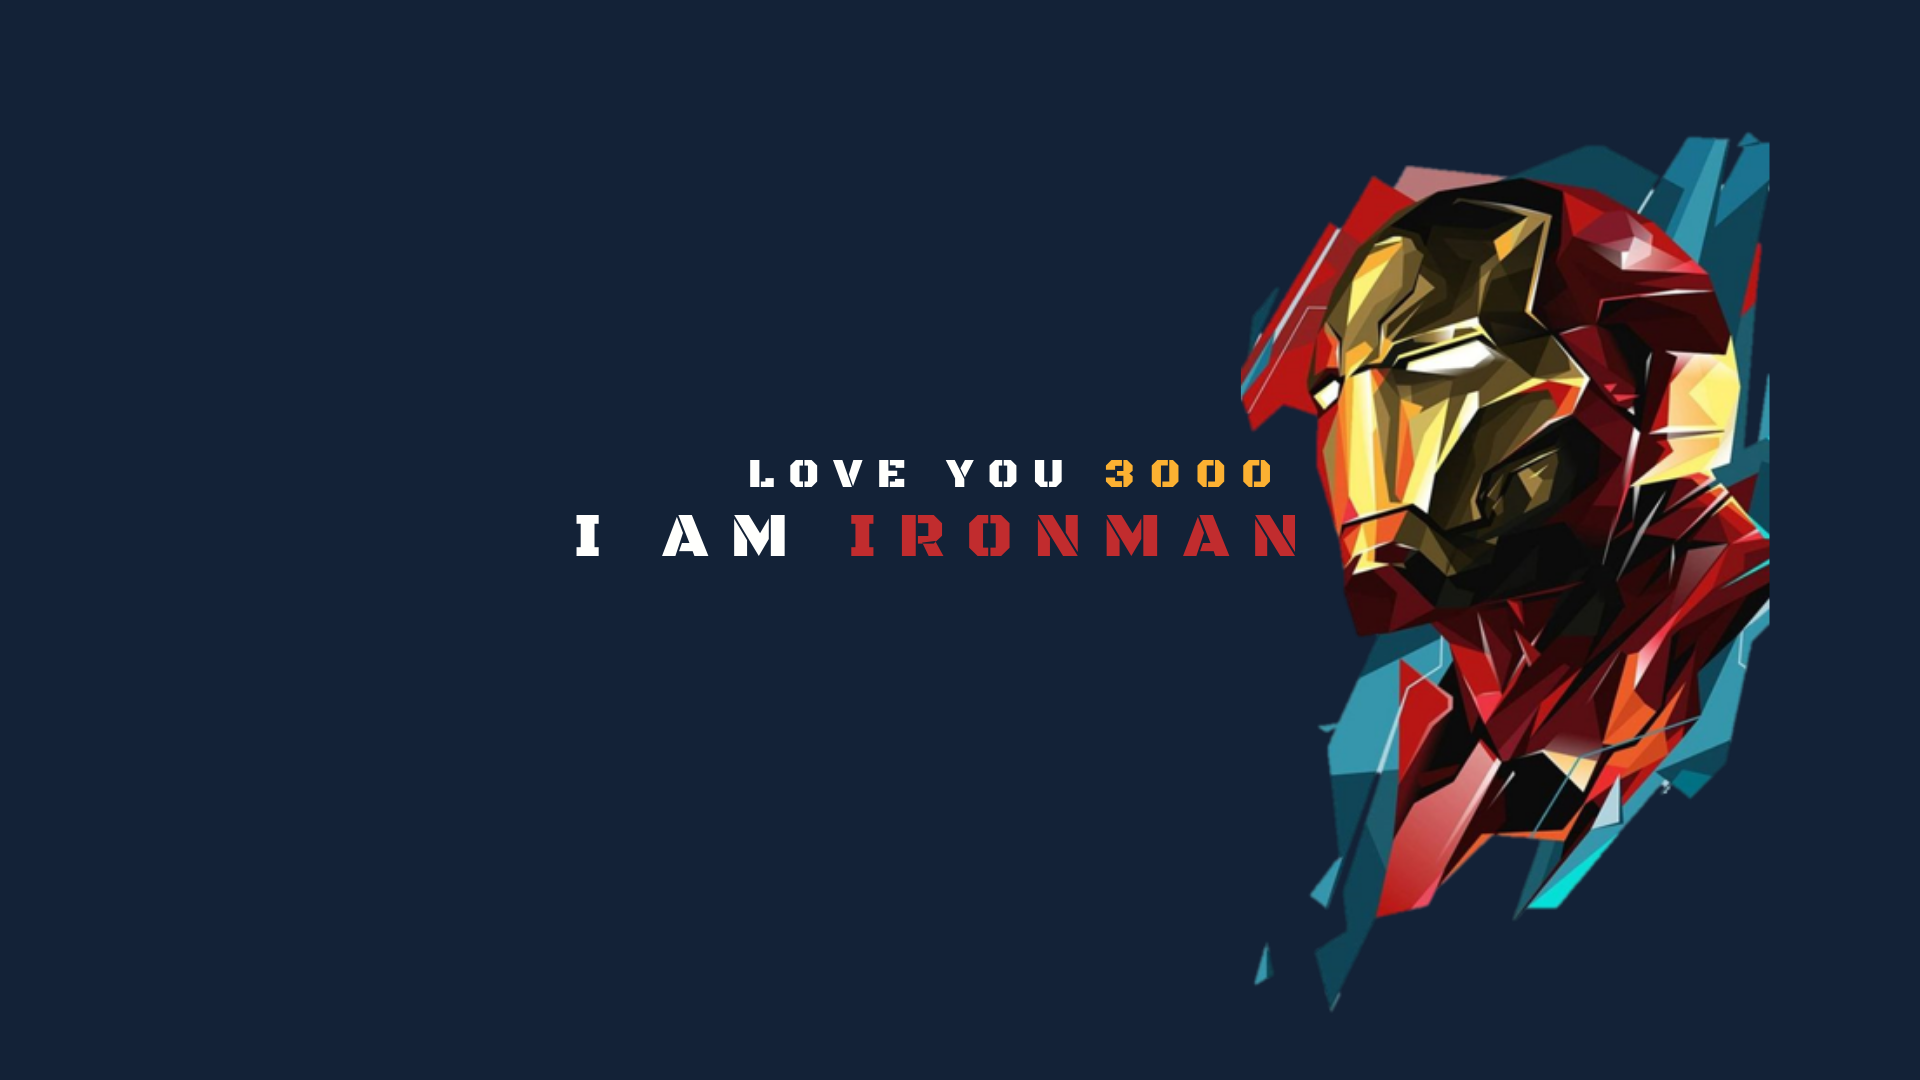 I Love You 3000 Tony Stark Iron Man Marvel Cinematic Universe Marvel Comics Avengers Infinity War Av 1920x1080